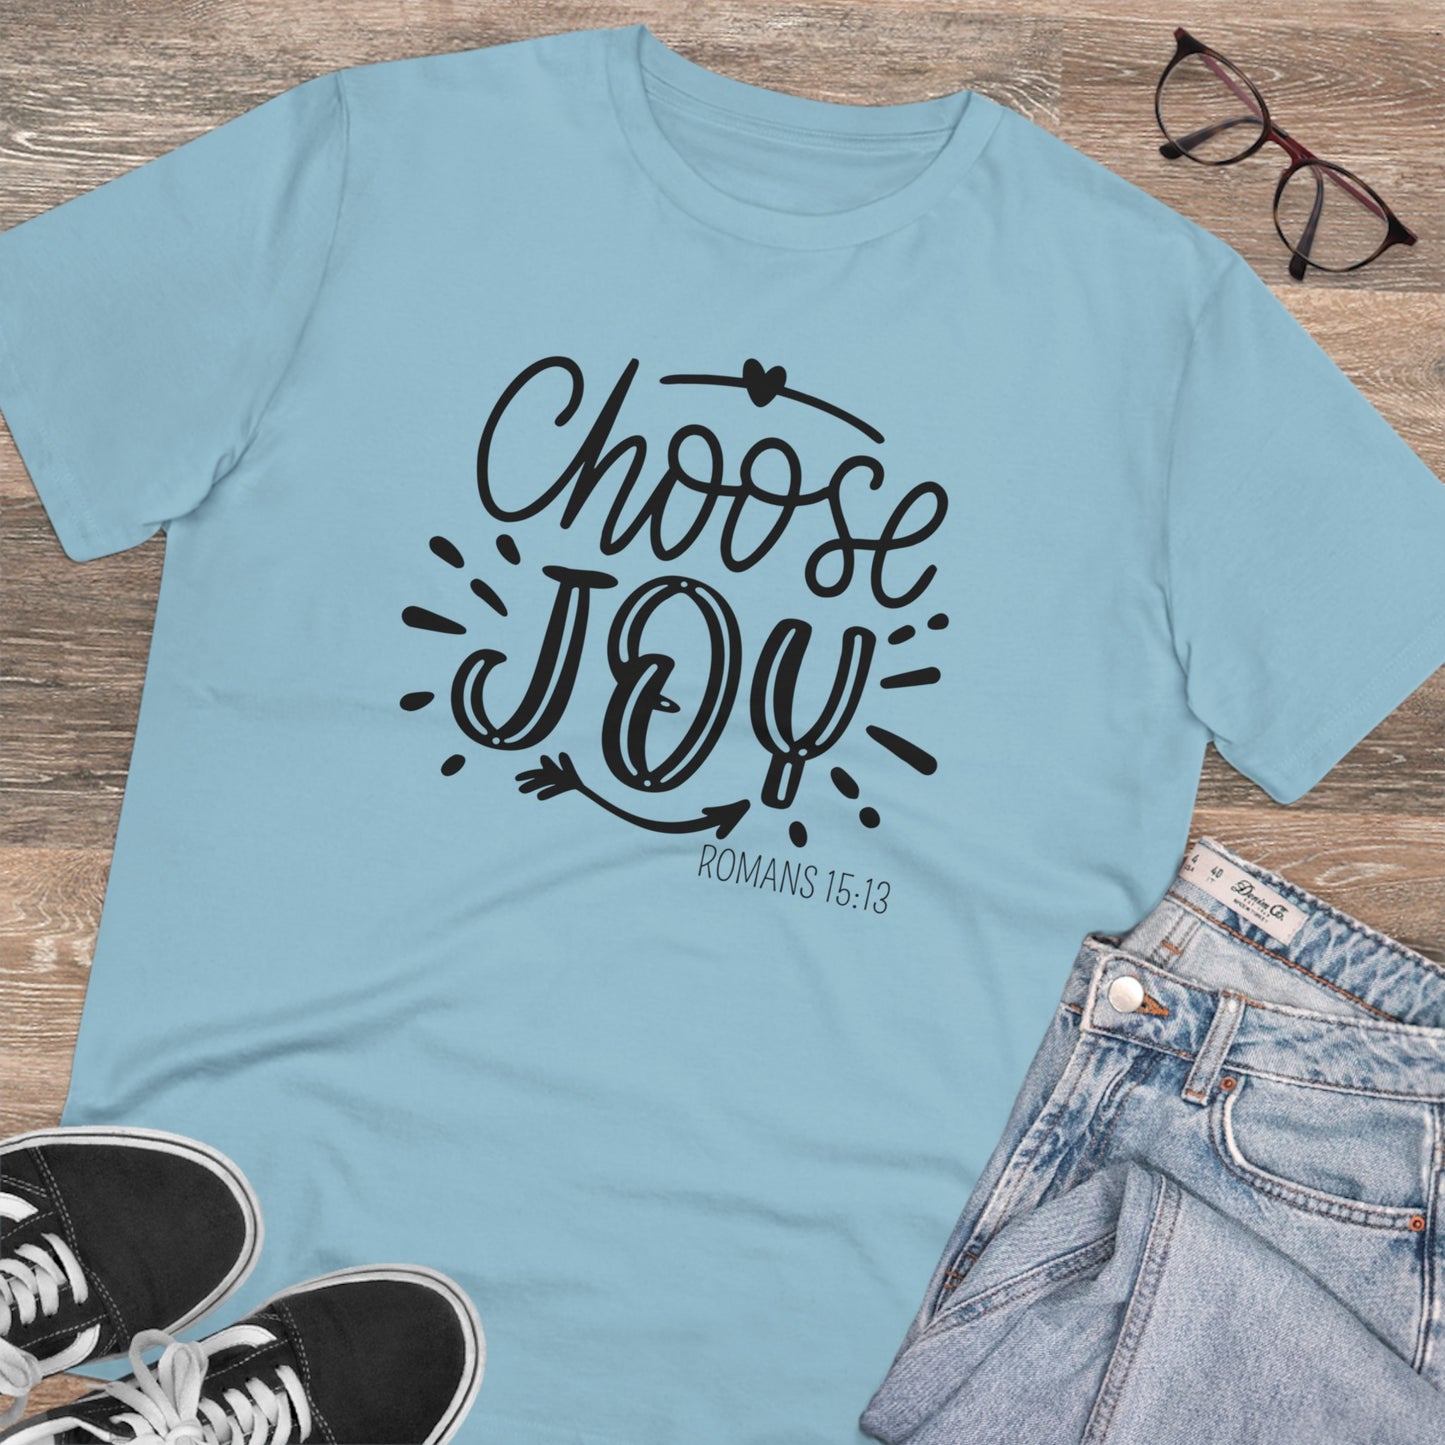 Choose Joy - Romans 15:13 - Organic Unisex T-shirt